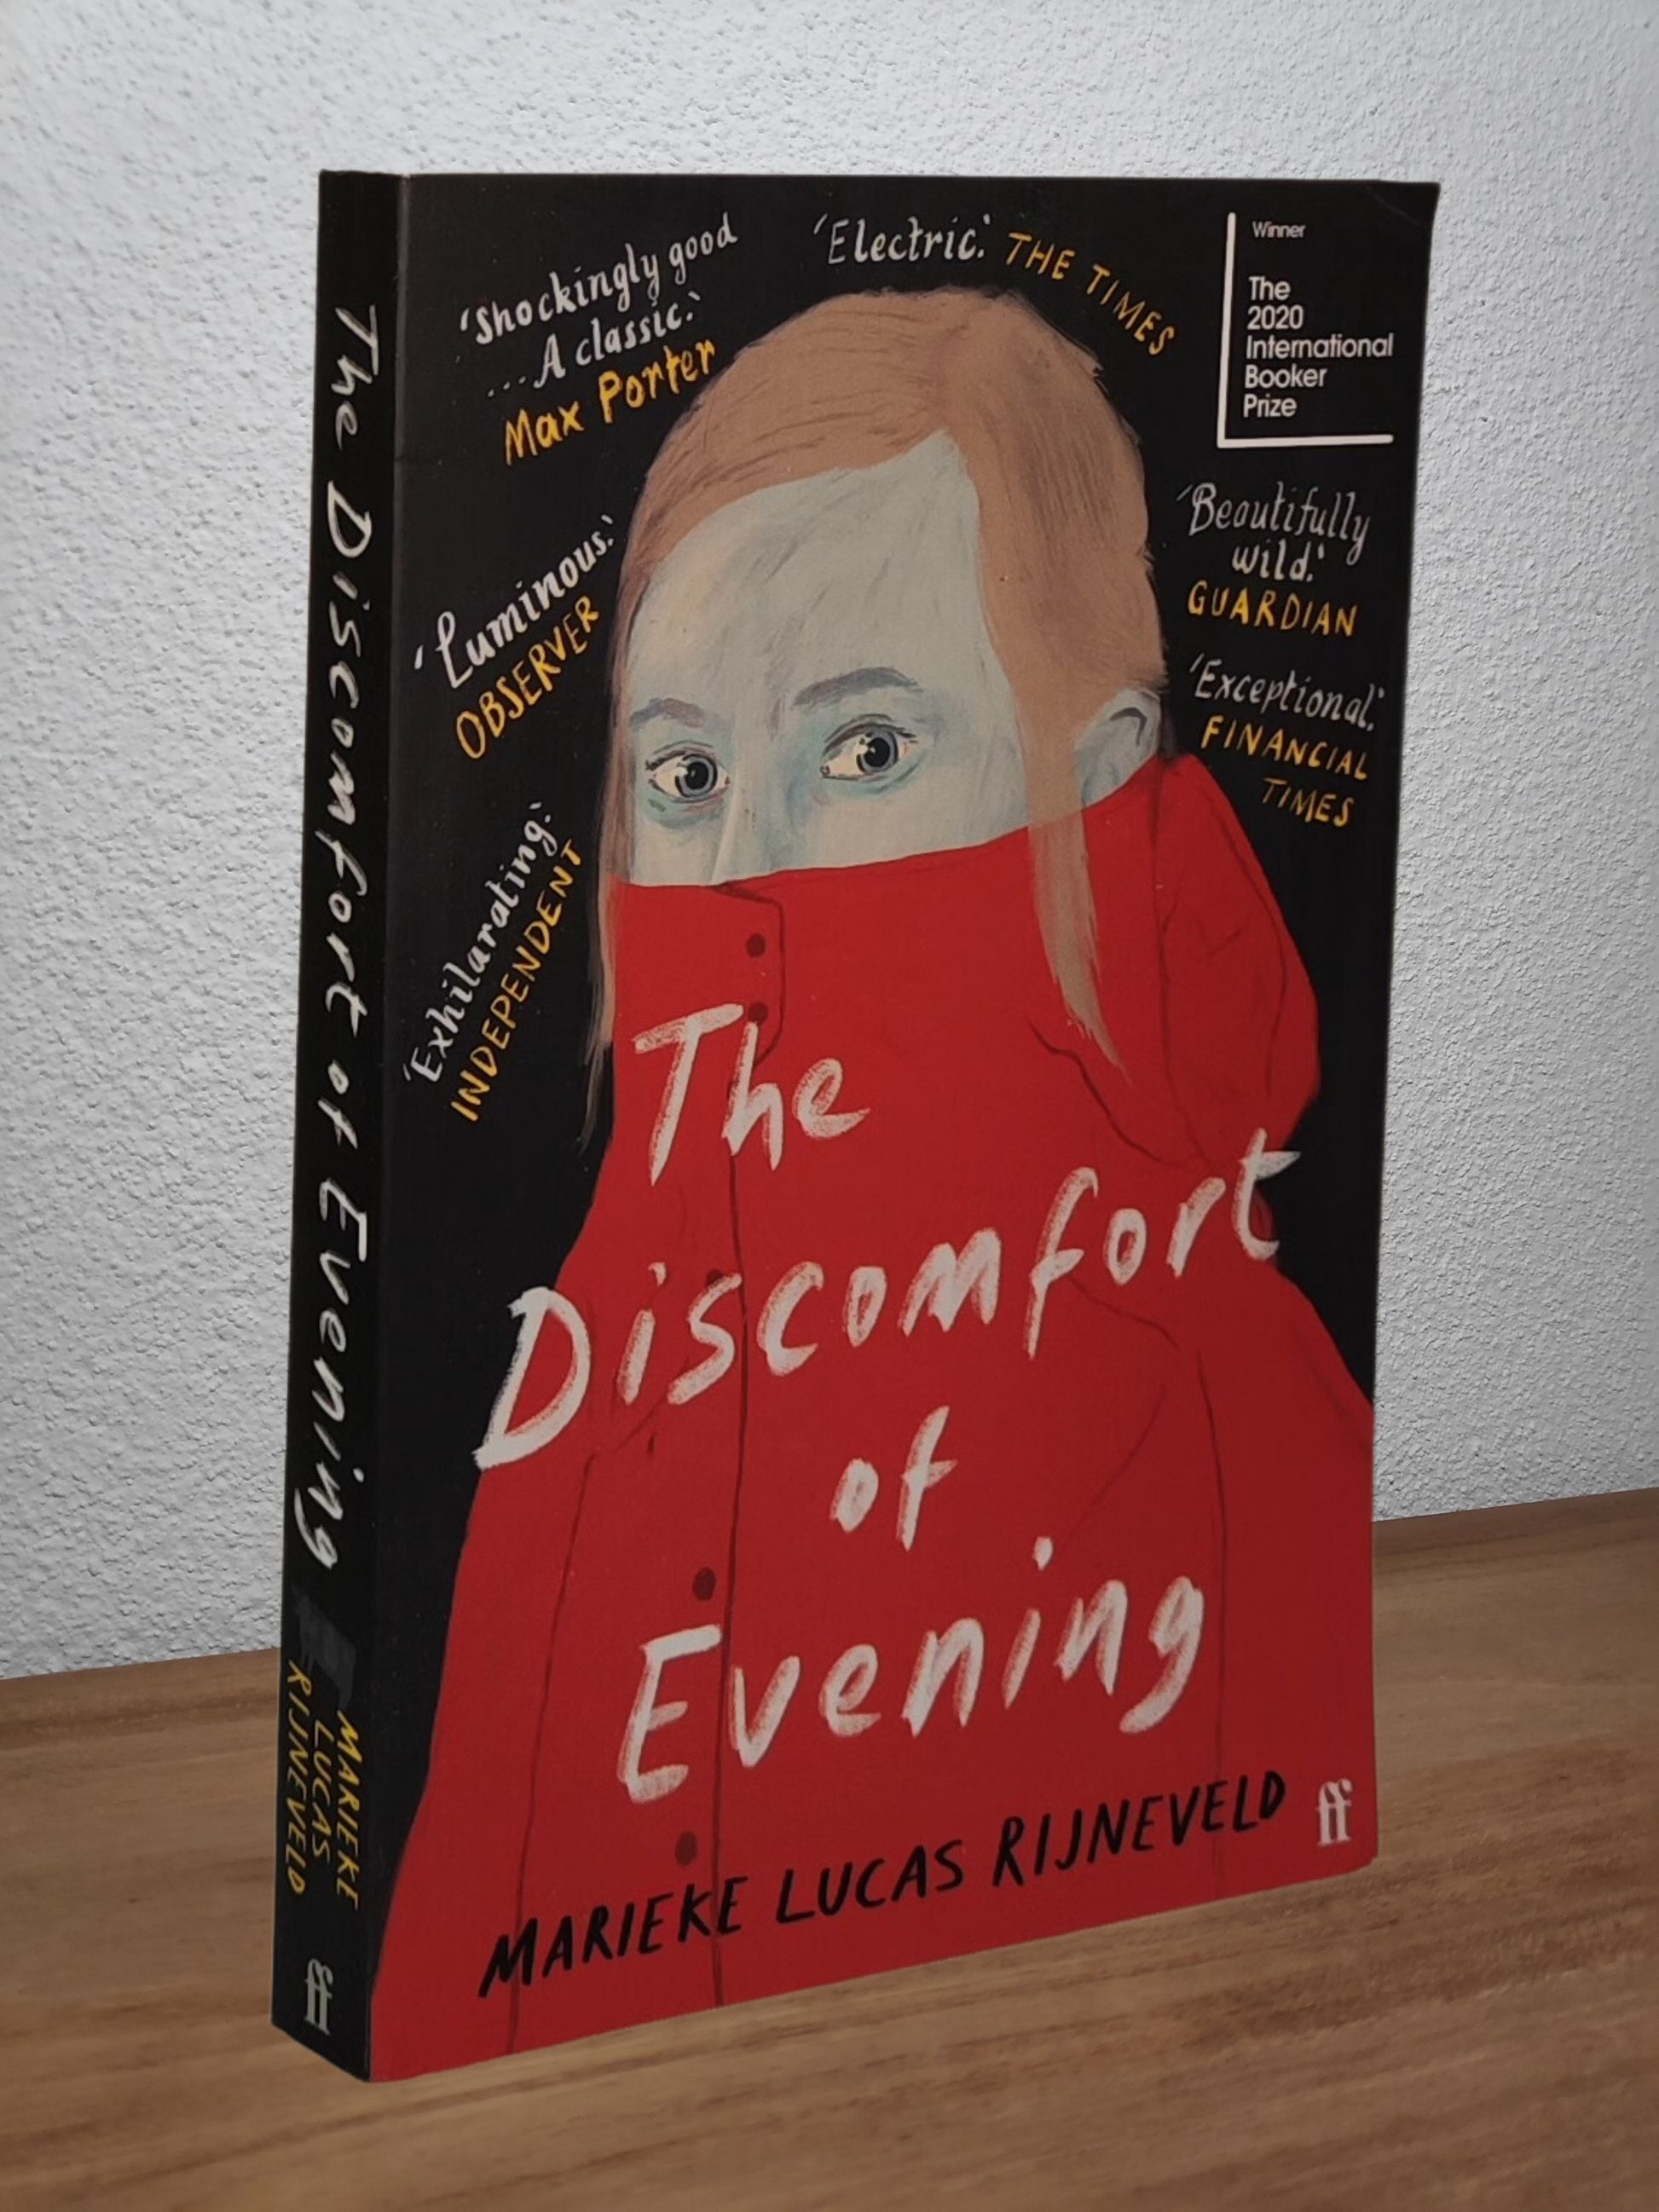 Marieke Lucas Rijneveld - The Discomfort of Evening  - Second-hand english book to deliver in Zurich & Switzerland